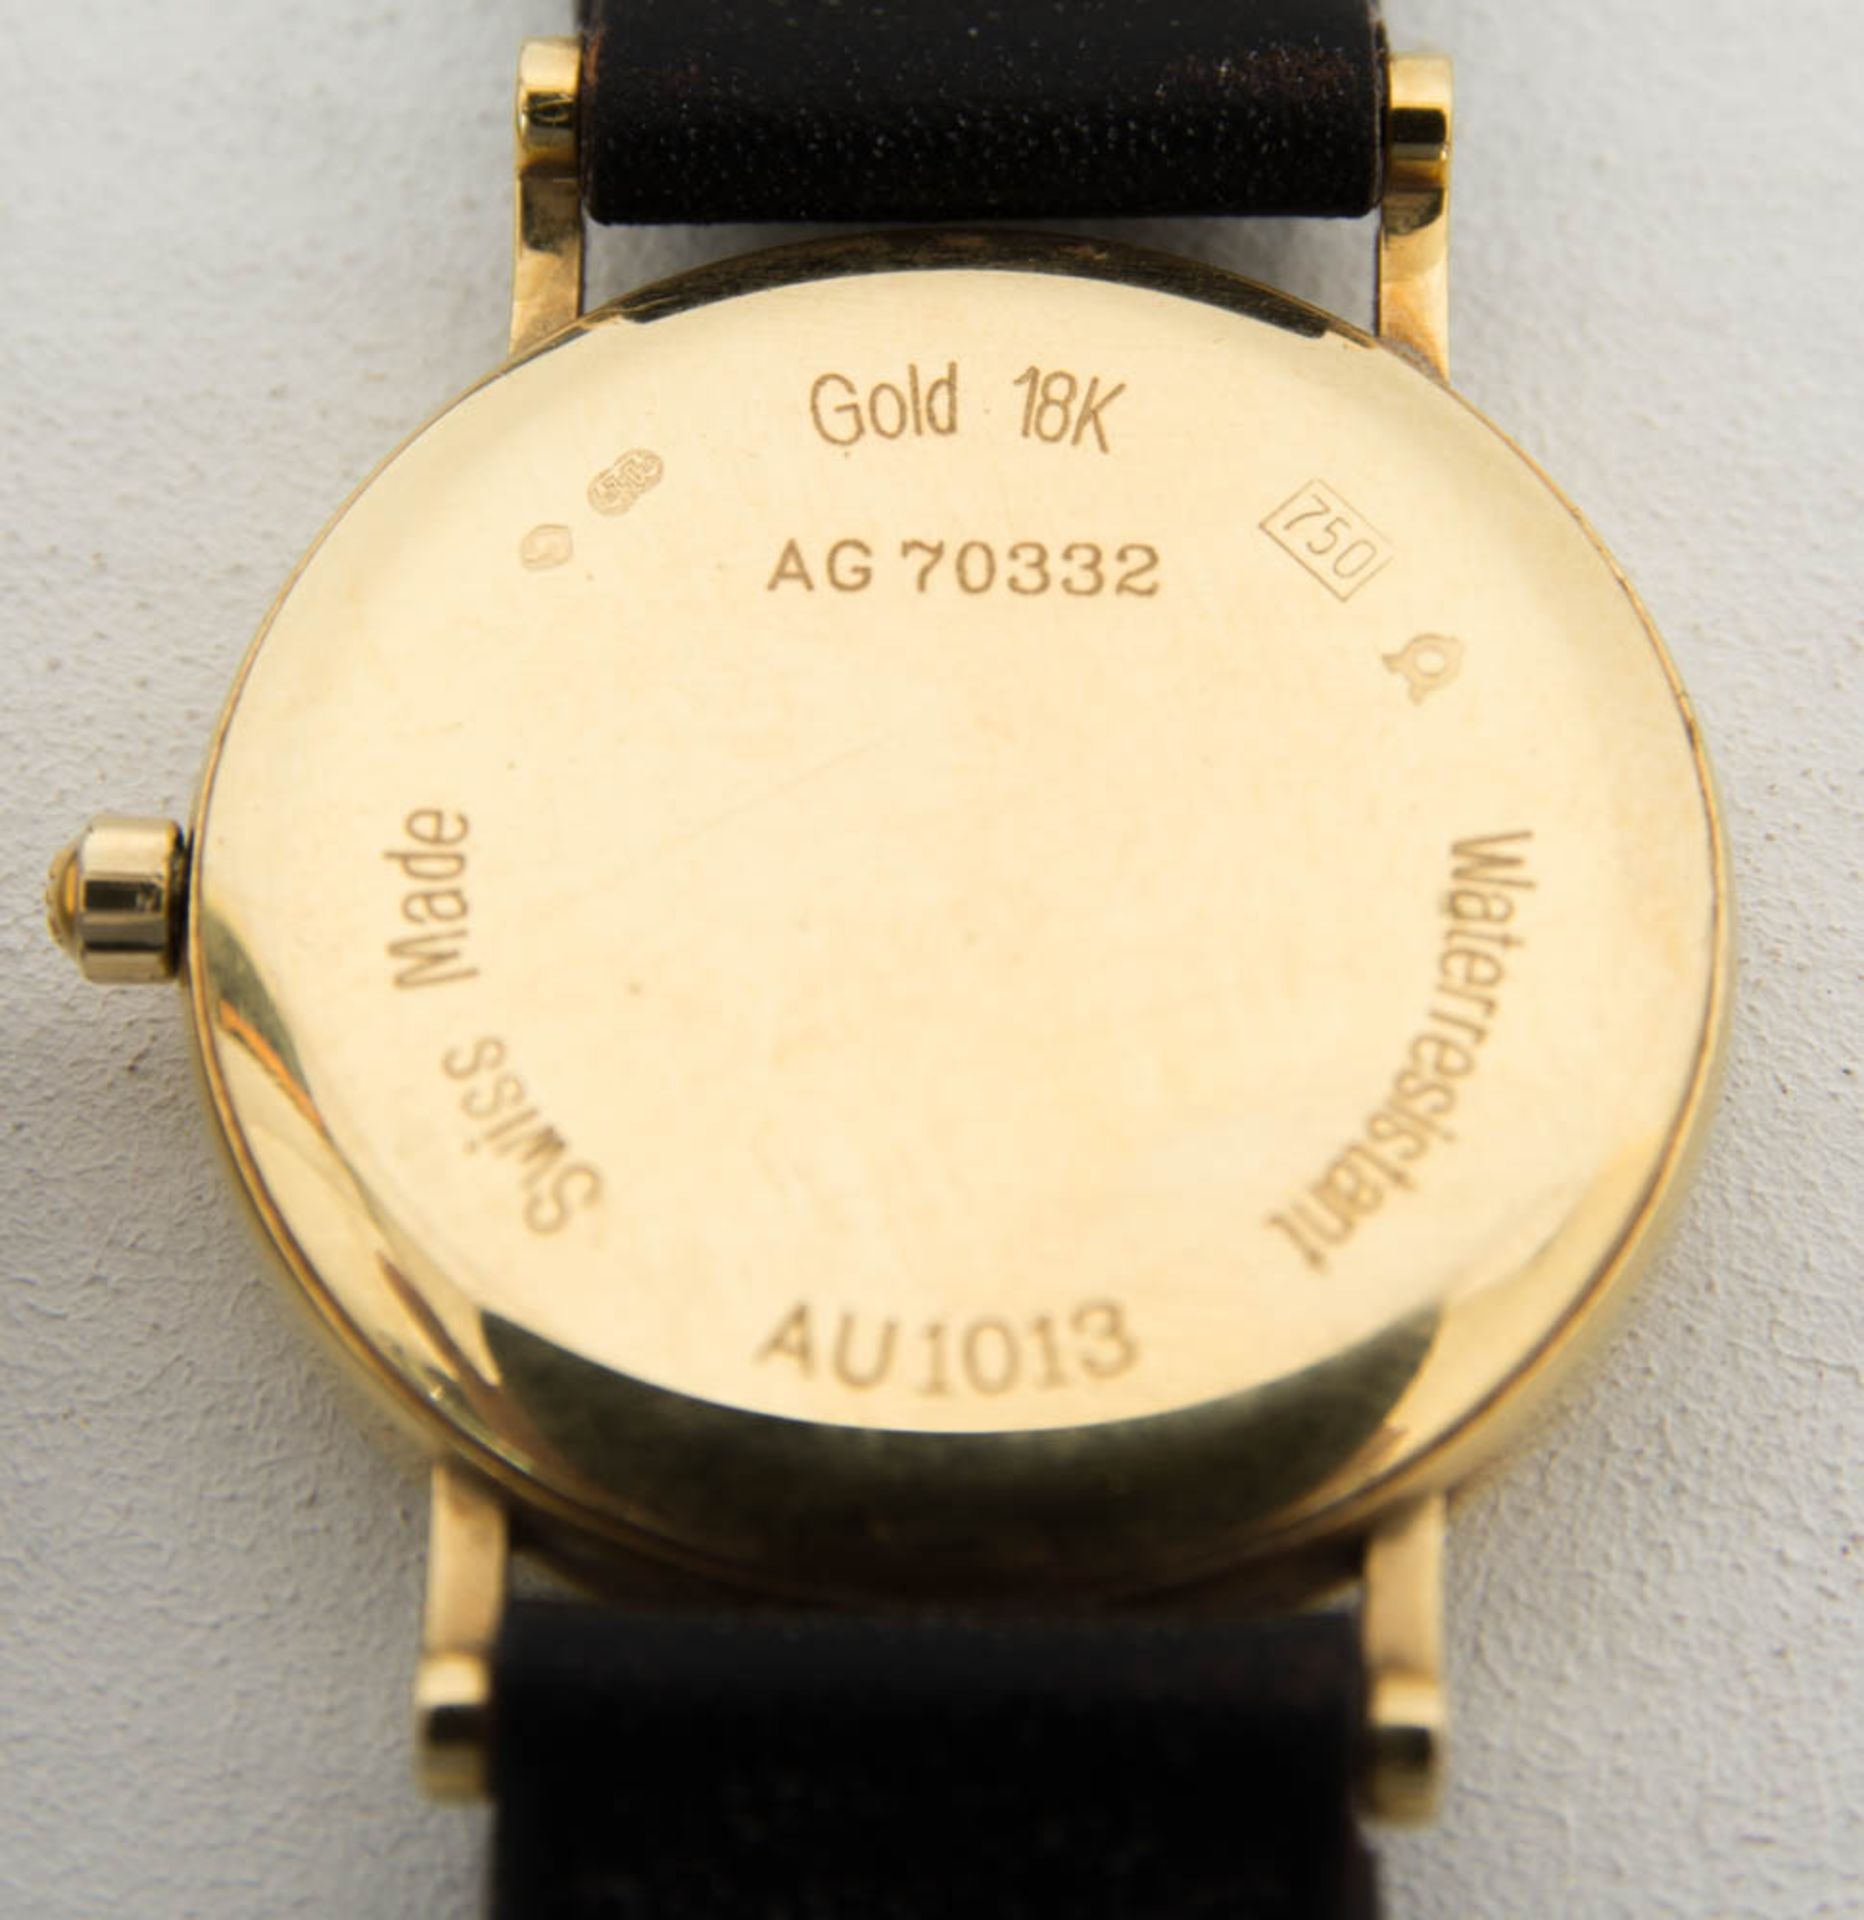 Zwei Damenarmbanduhren, Maurice Lacroix le Classic 18 K Gelbgold und Tunlees Uhr vergoldet. - Image 6 of 6